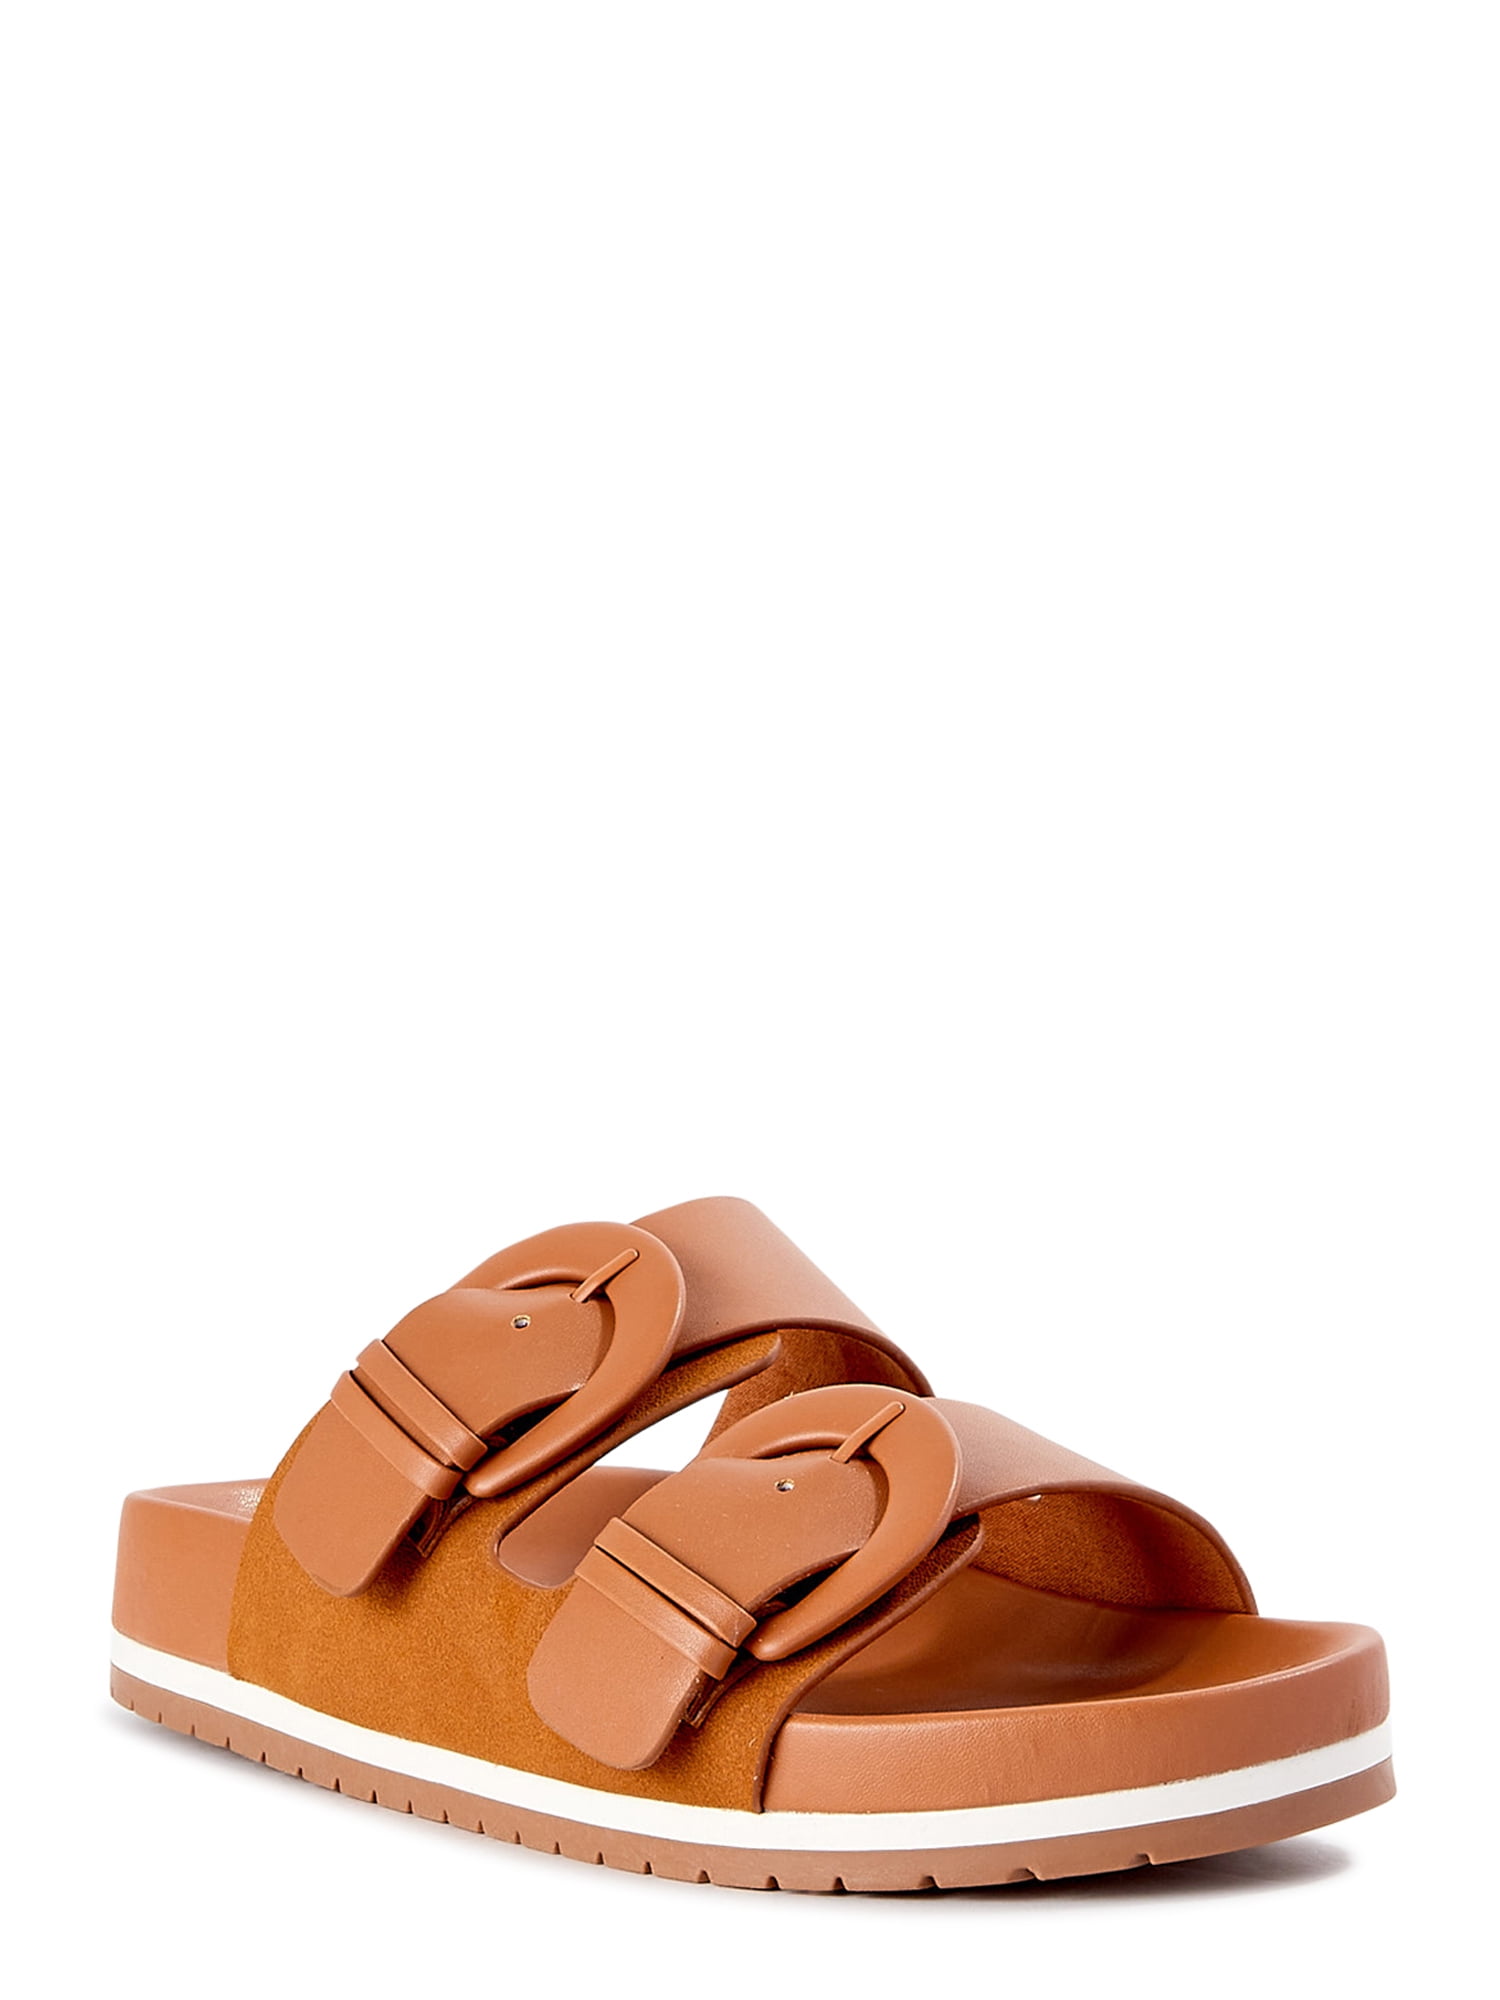 Summer closet essentials Popular sandals from Amazon and Walmart   syracusecom